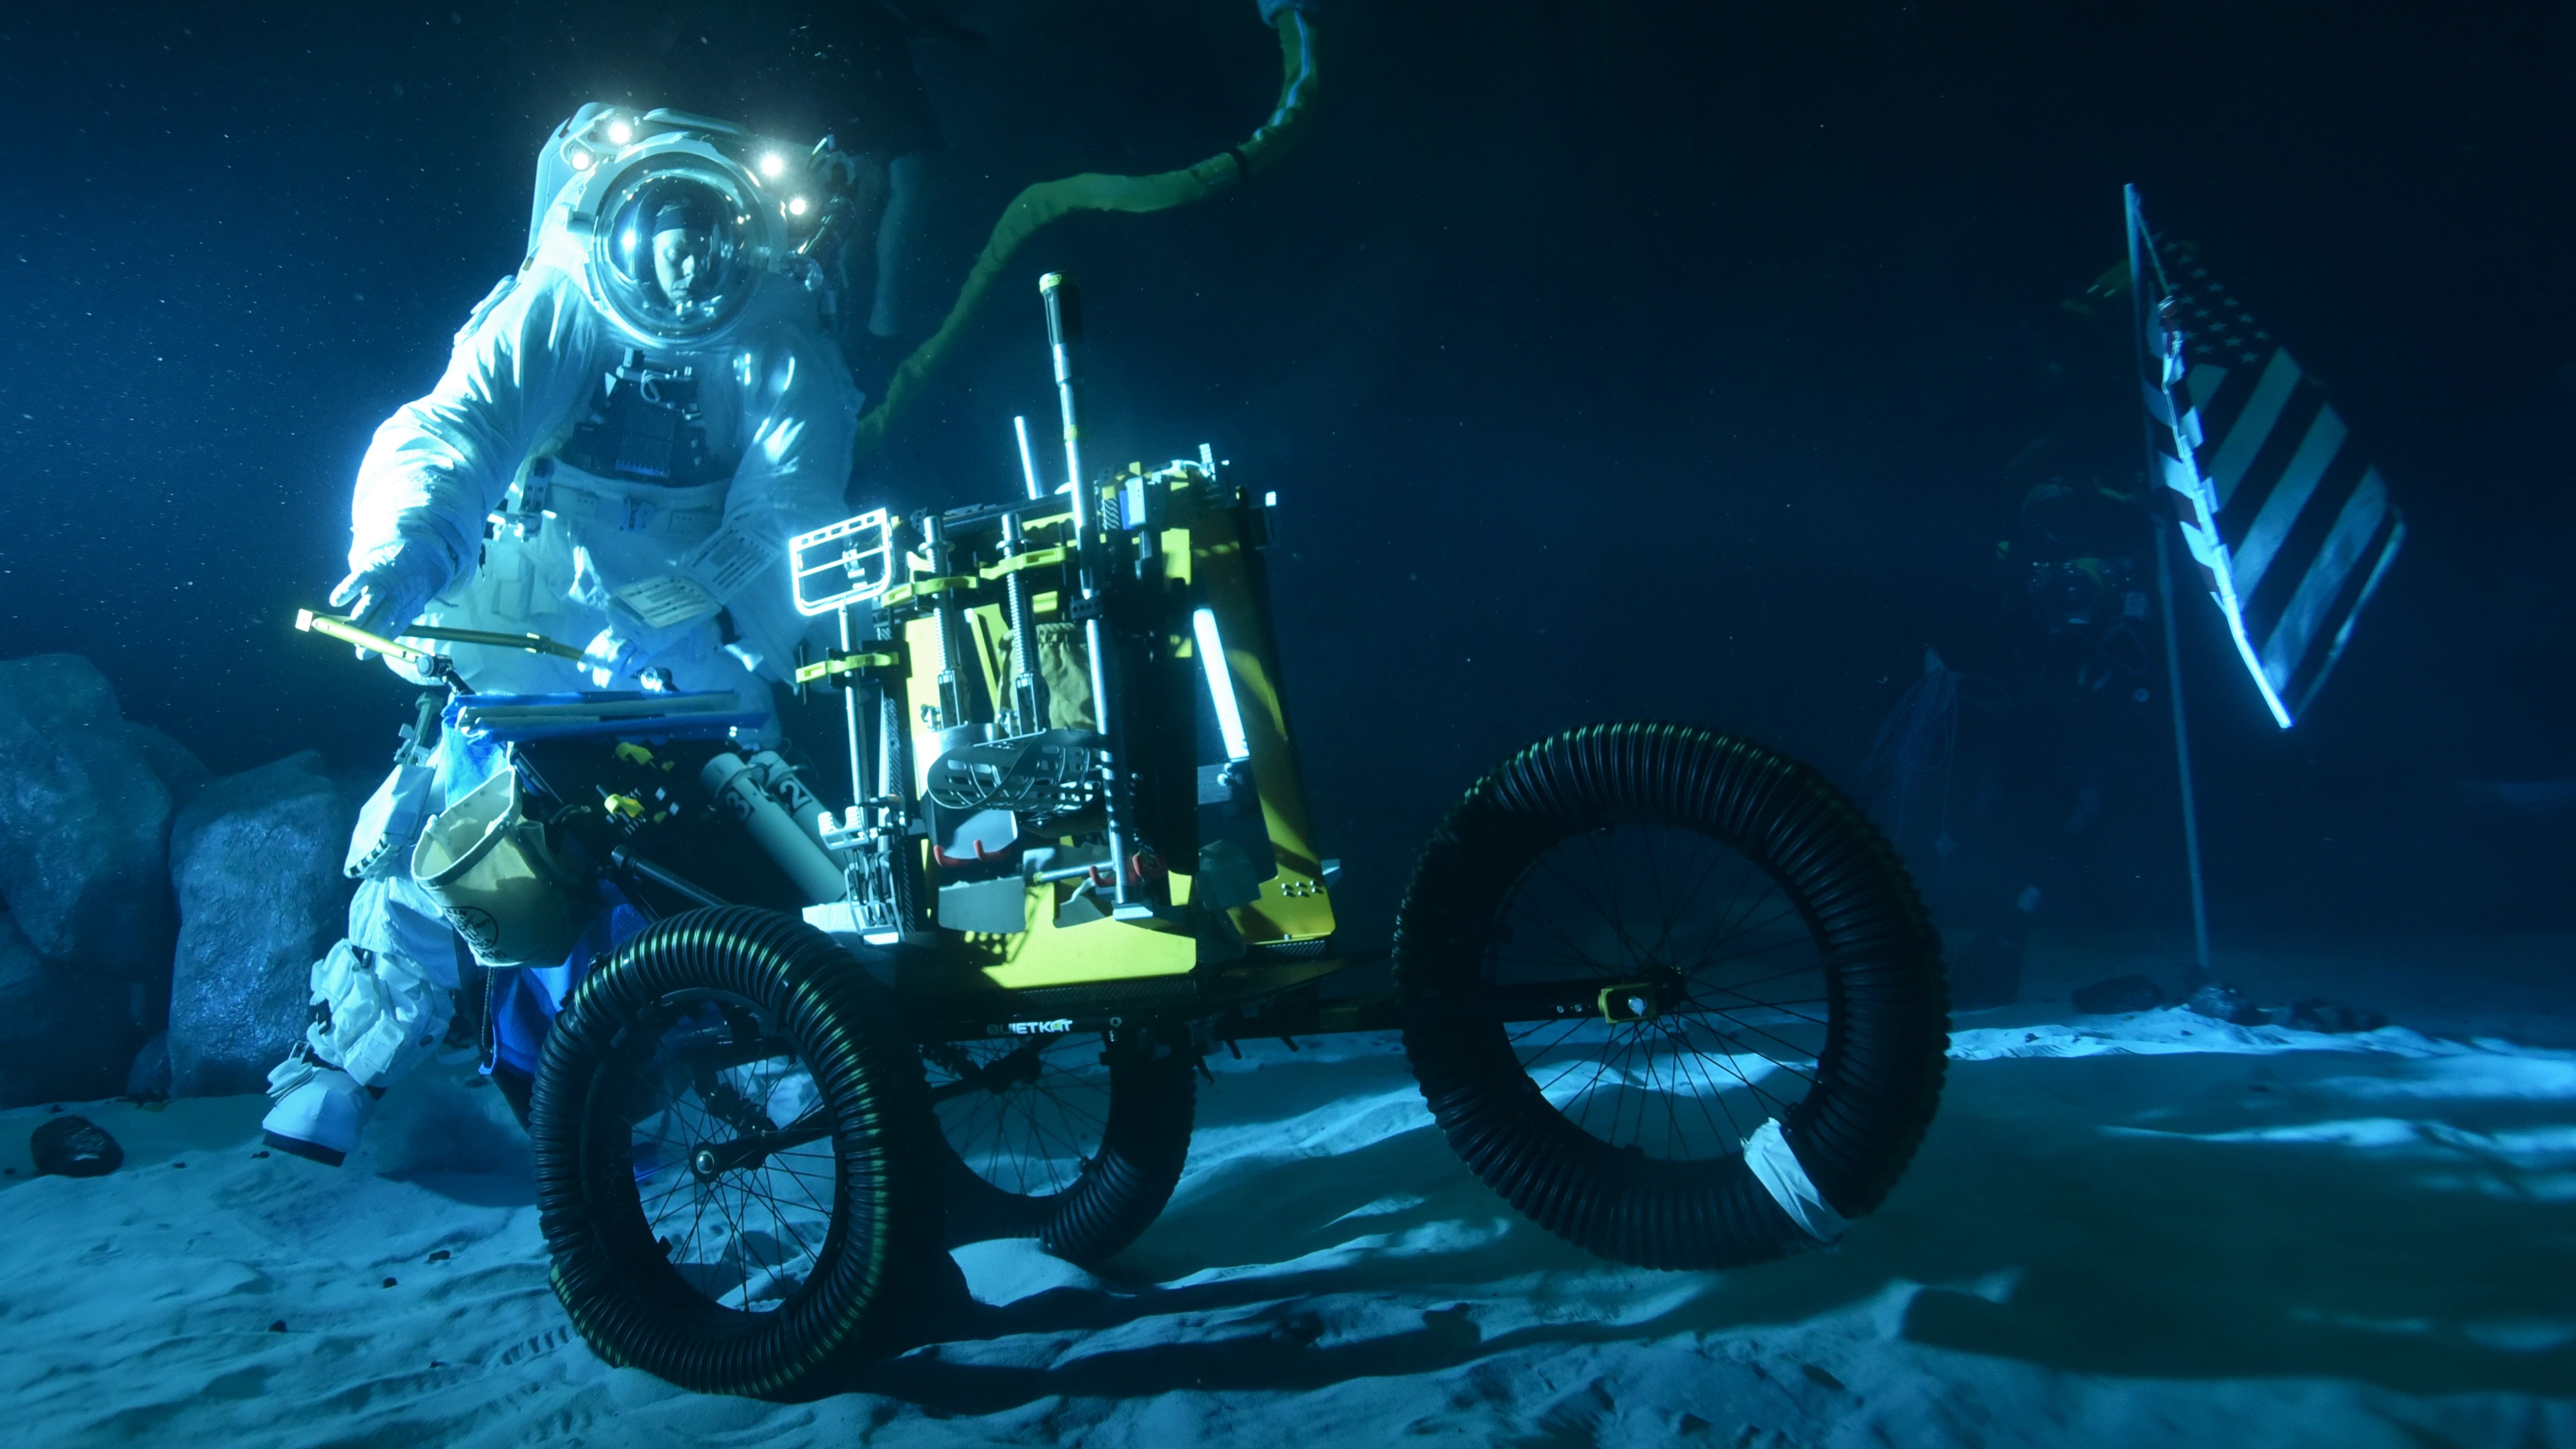 Underwater spacewalks recreate the 'moon' in a giant NASA pool (photos)